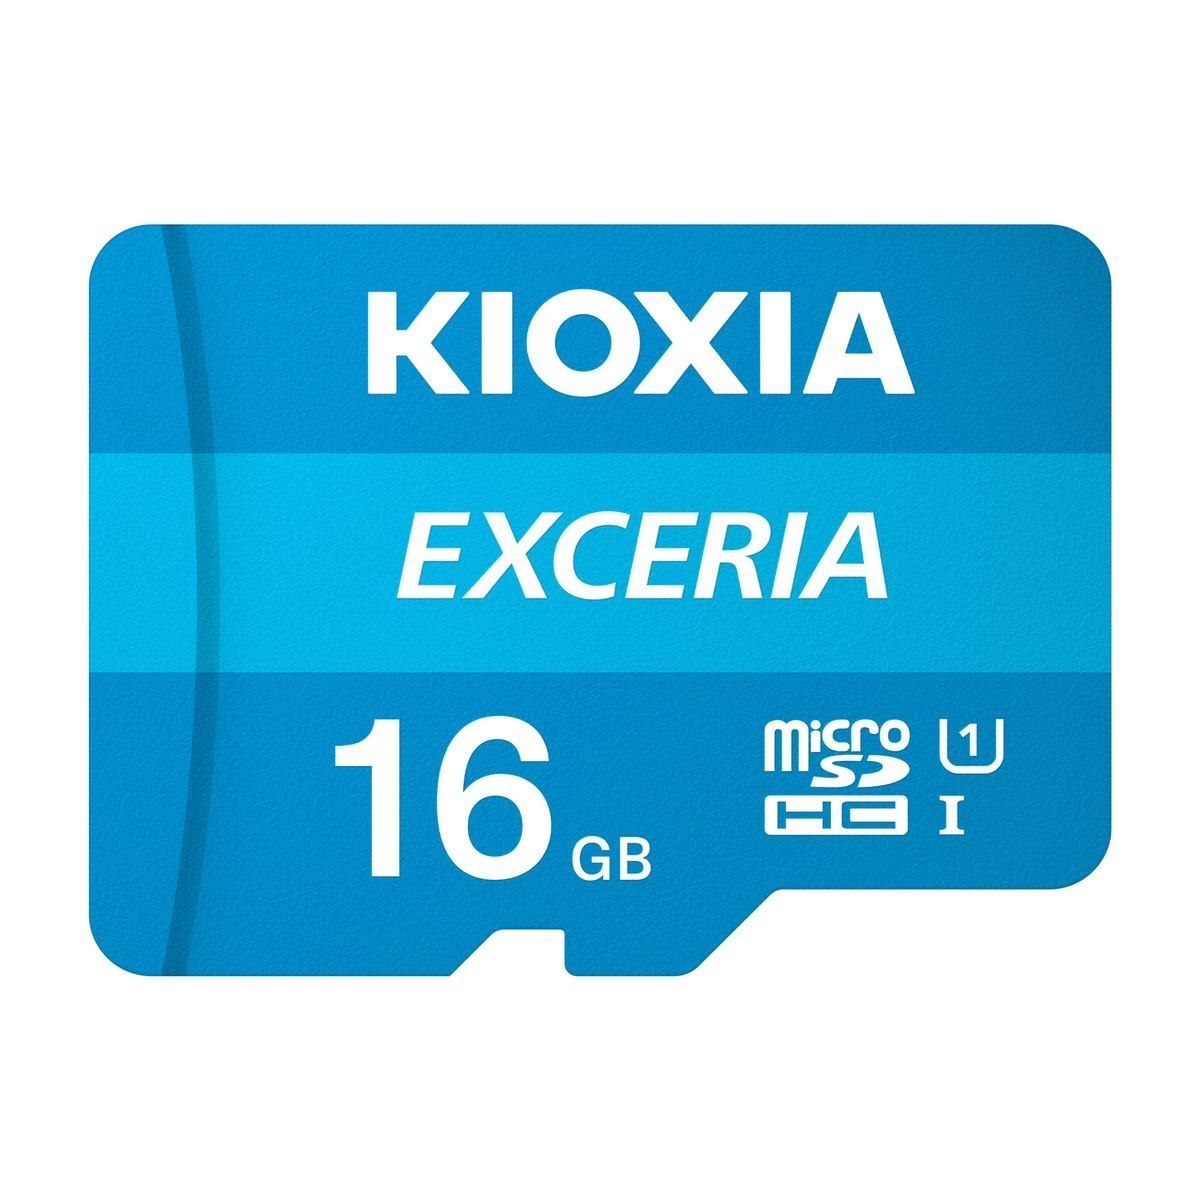 Kioxia Exceria 16 GB MicroSDHC Uhs-I Class 10 (Kioxia microSD-Card Exceria 16GB)